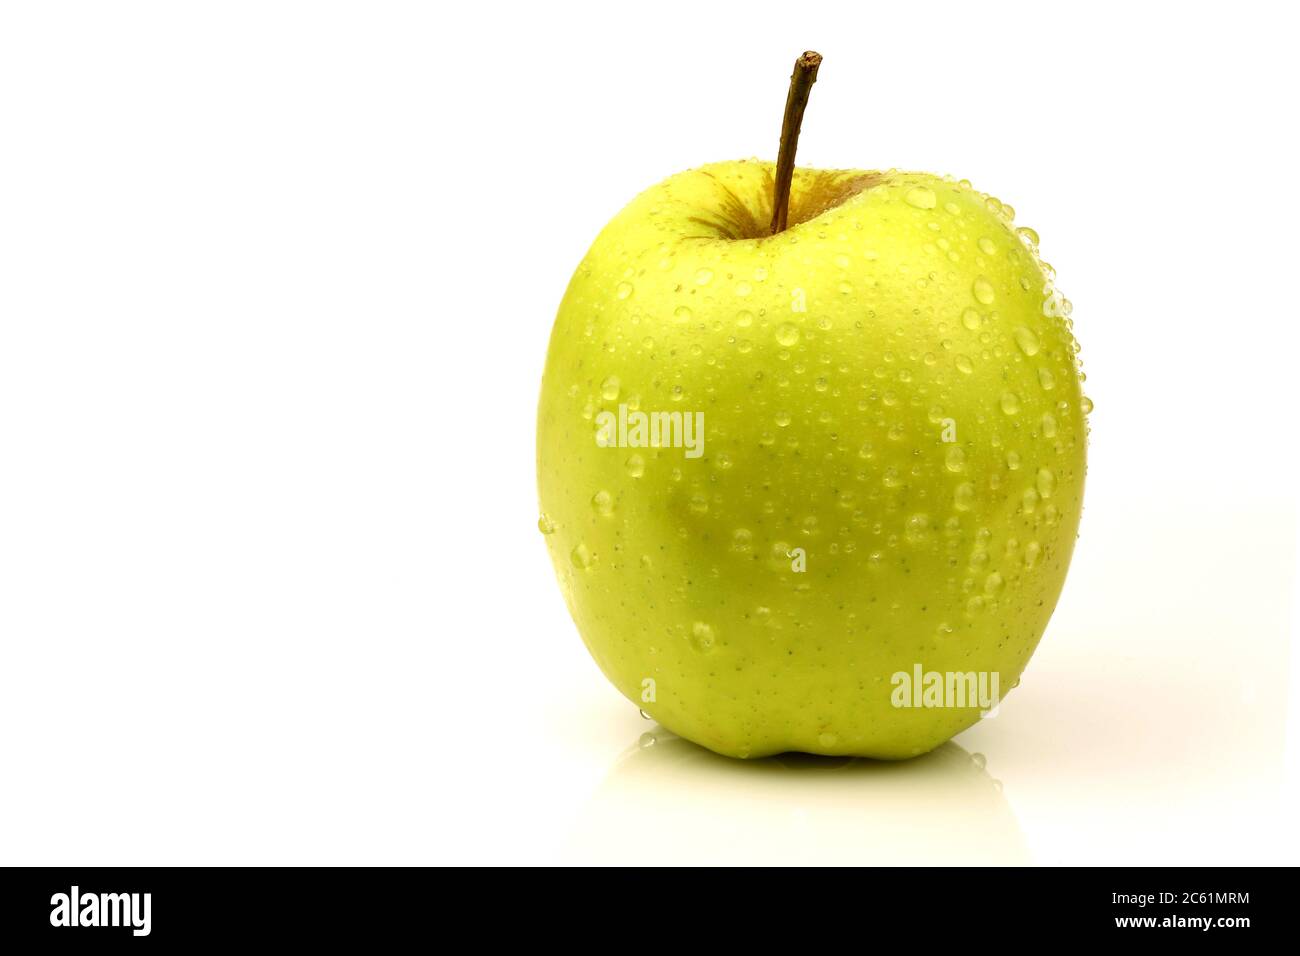 fresh 'Golden Delicious' apple on a white background Stock Photo